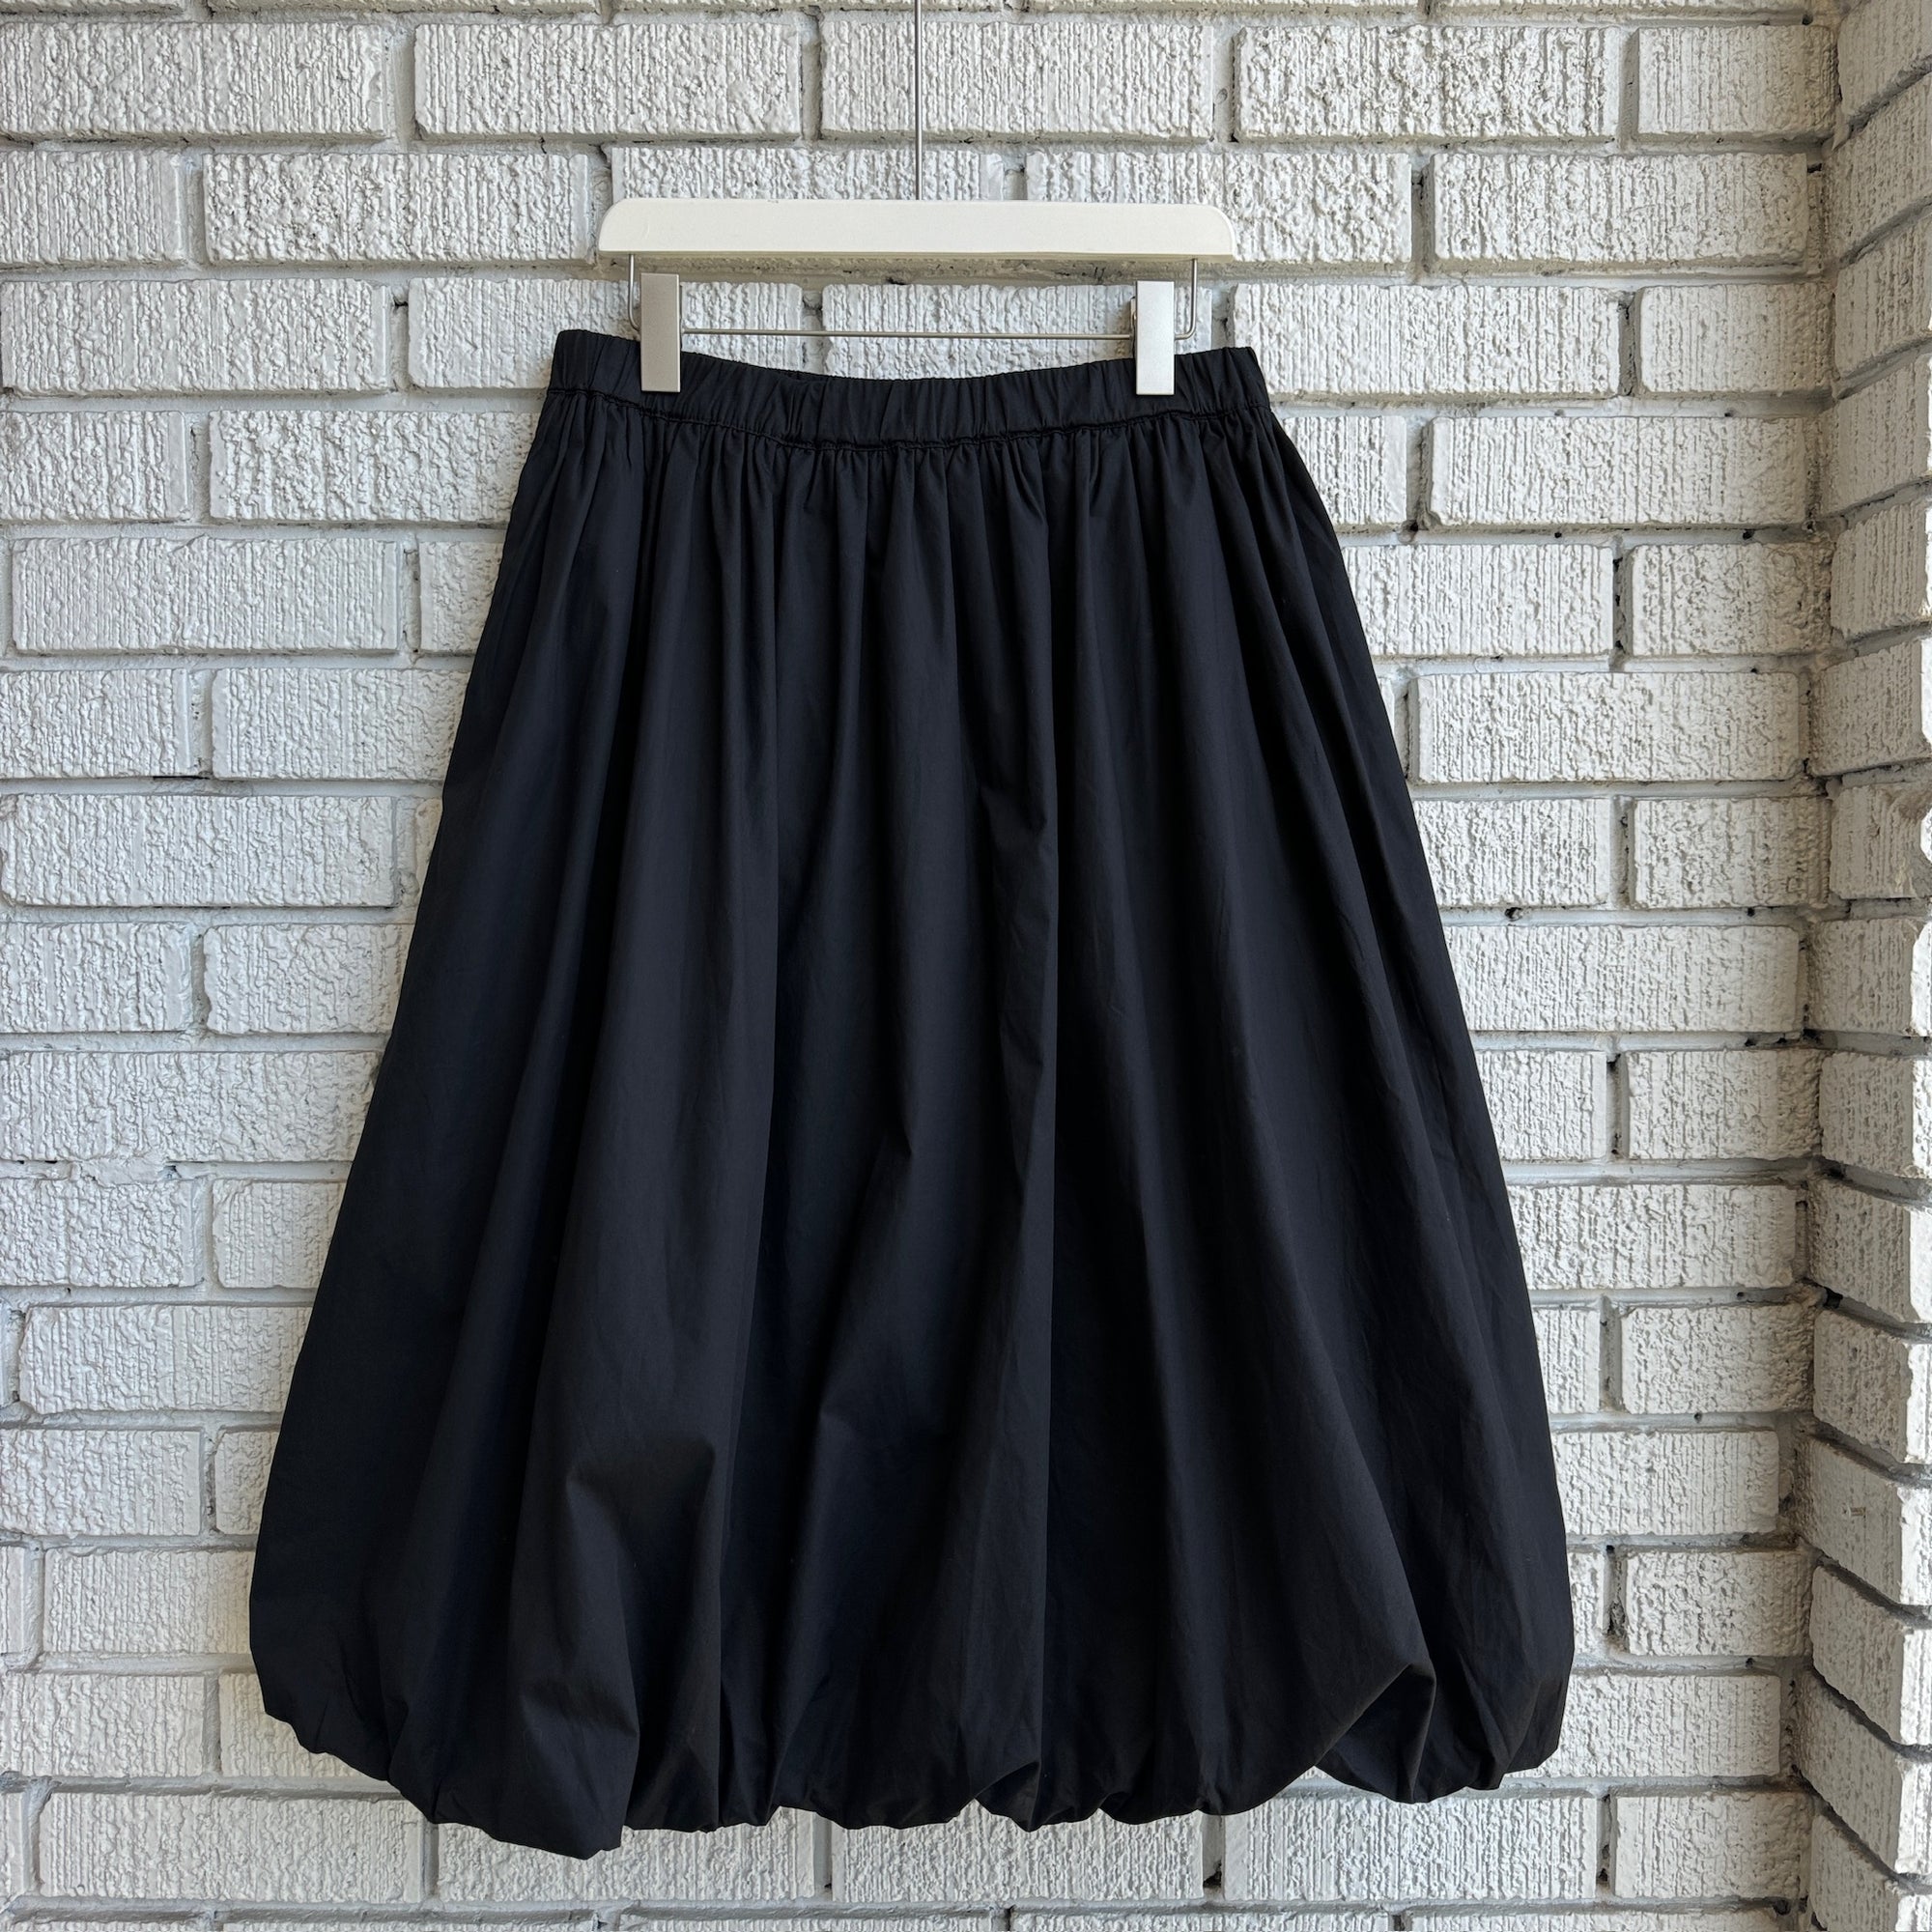 THE BELLA Skirt